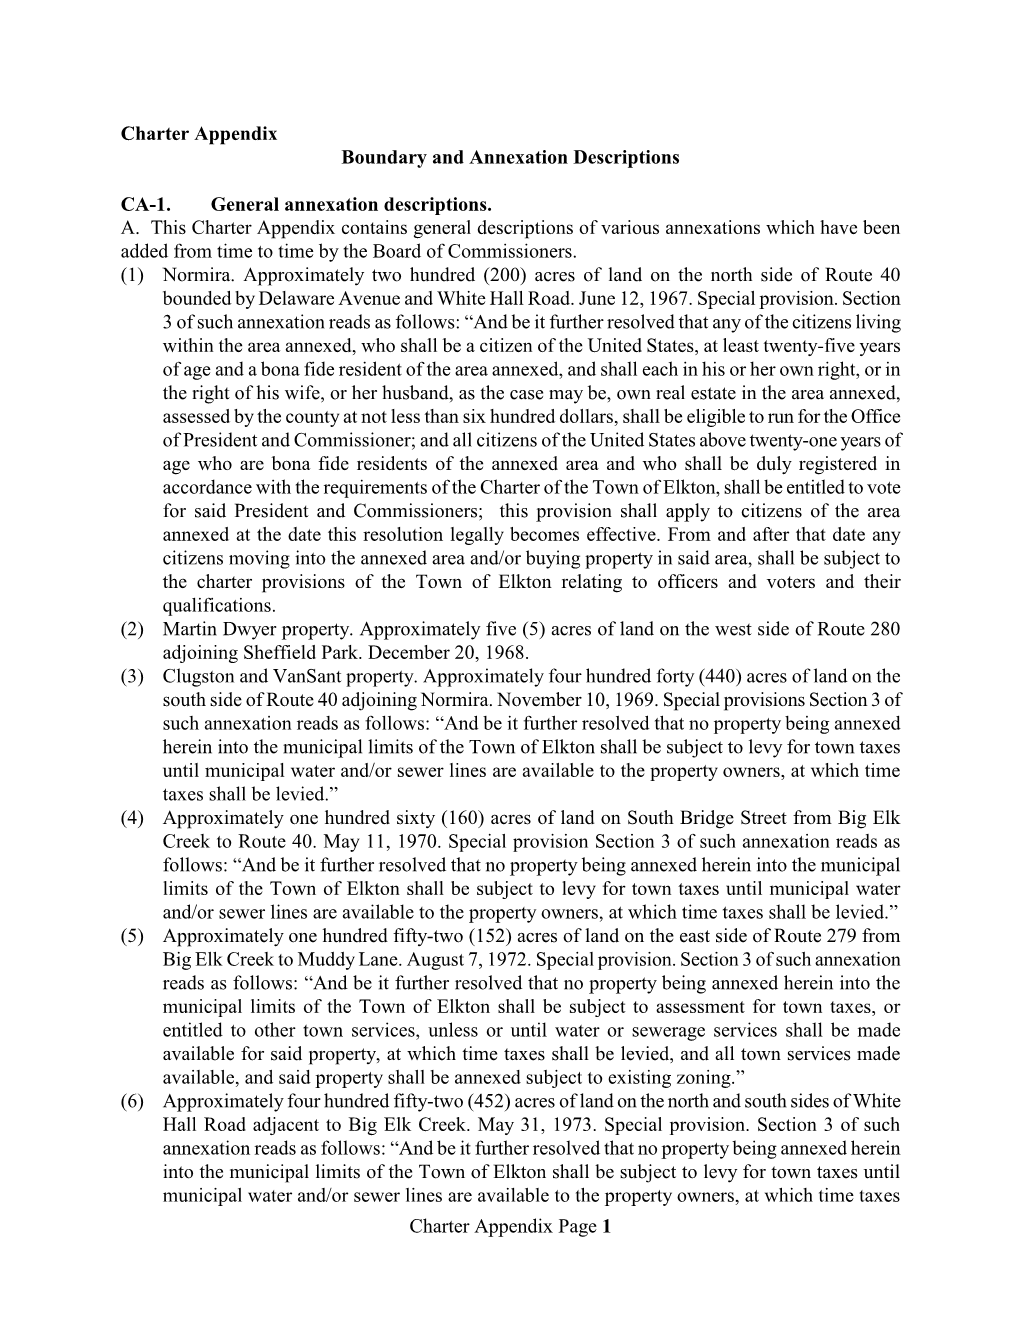 Charter Appendix Boundary and Annexation Descriptions